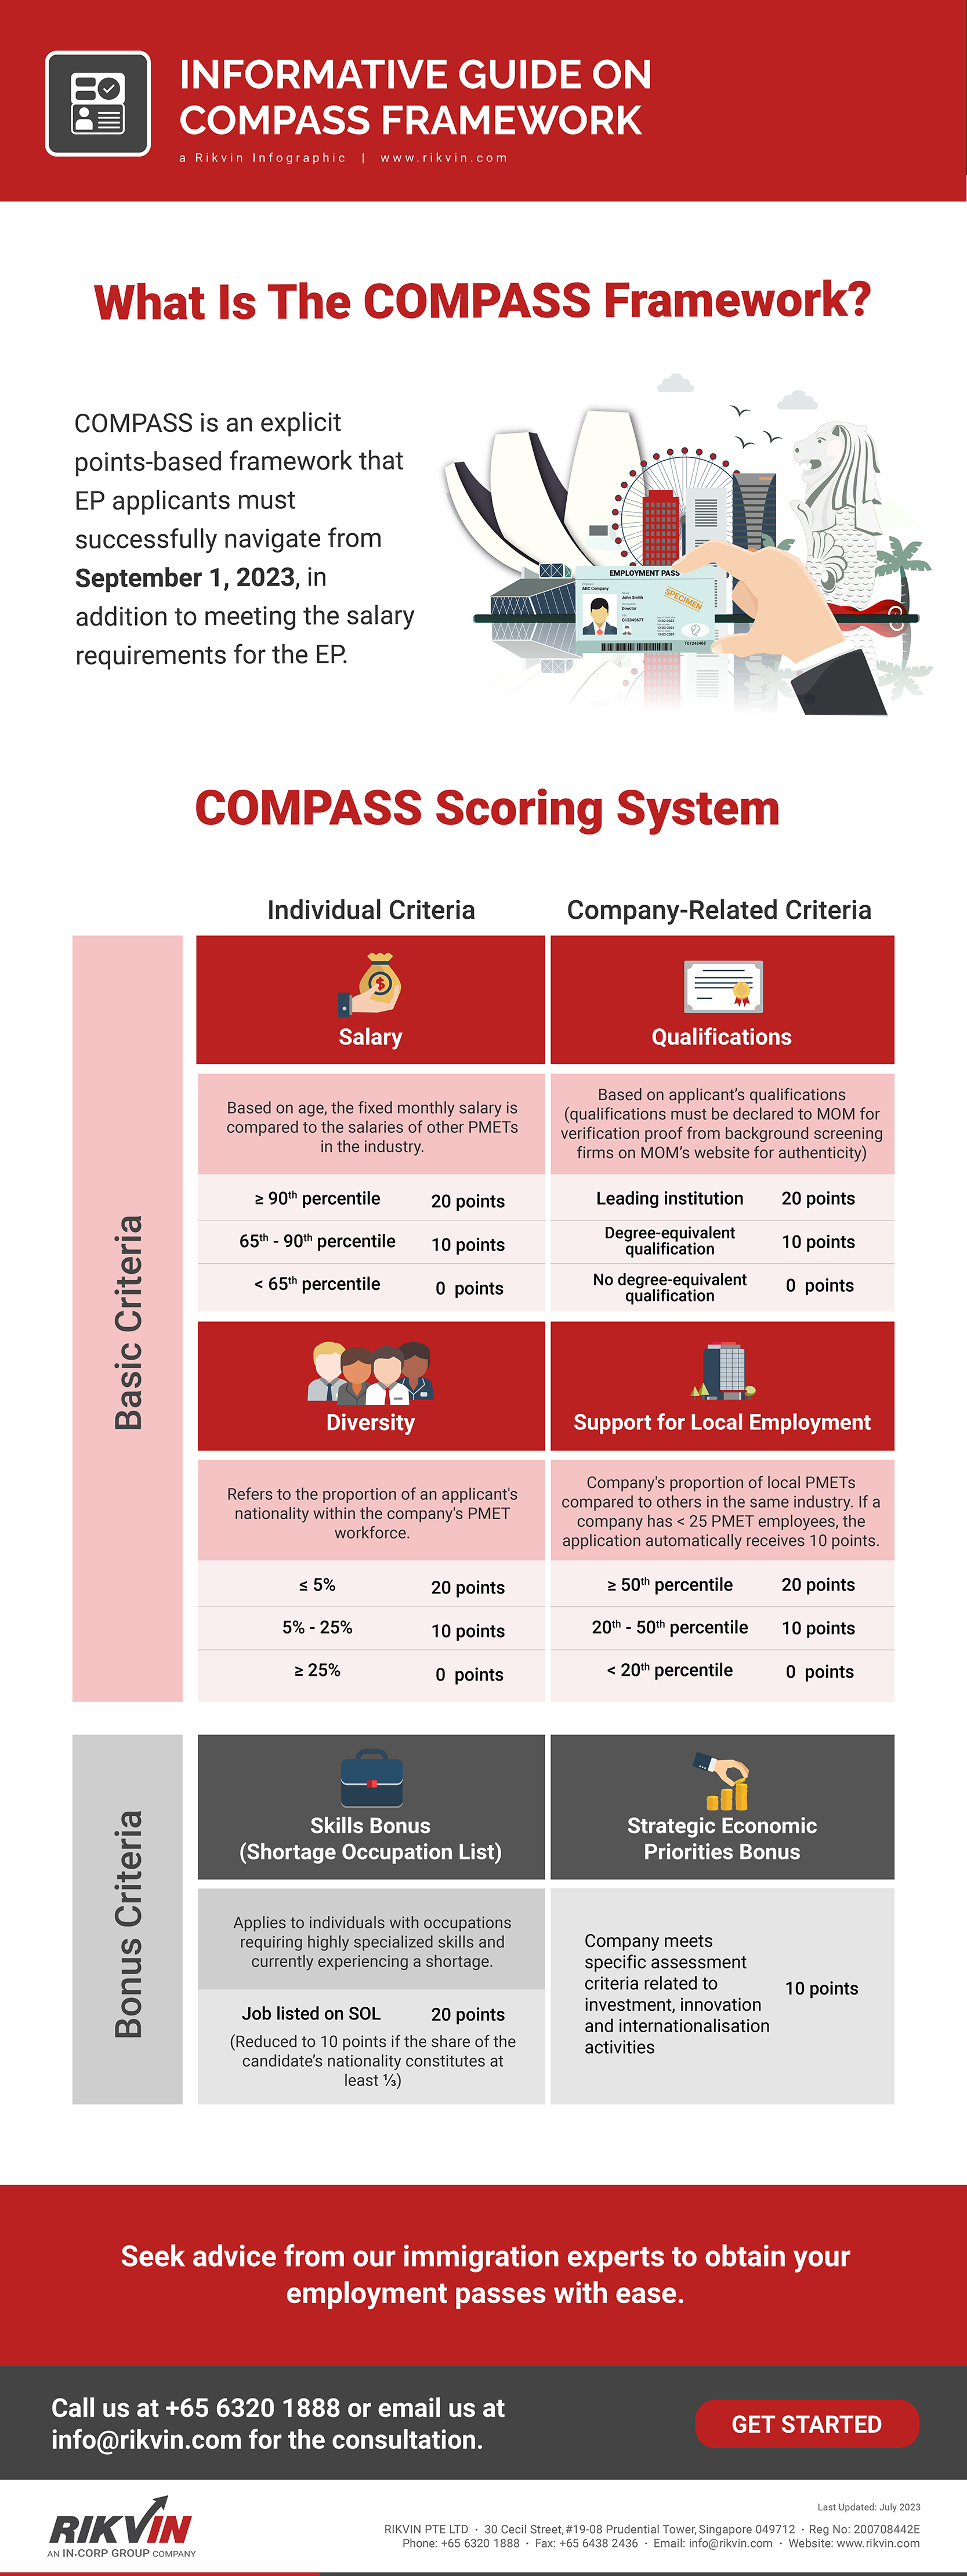 Rikvin Informative Guide on COMPASS Framework Infographic